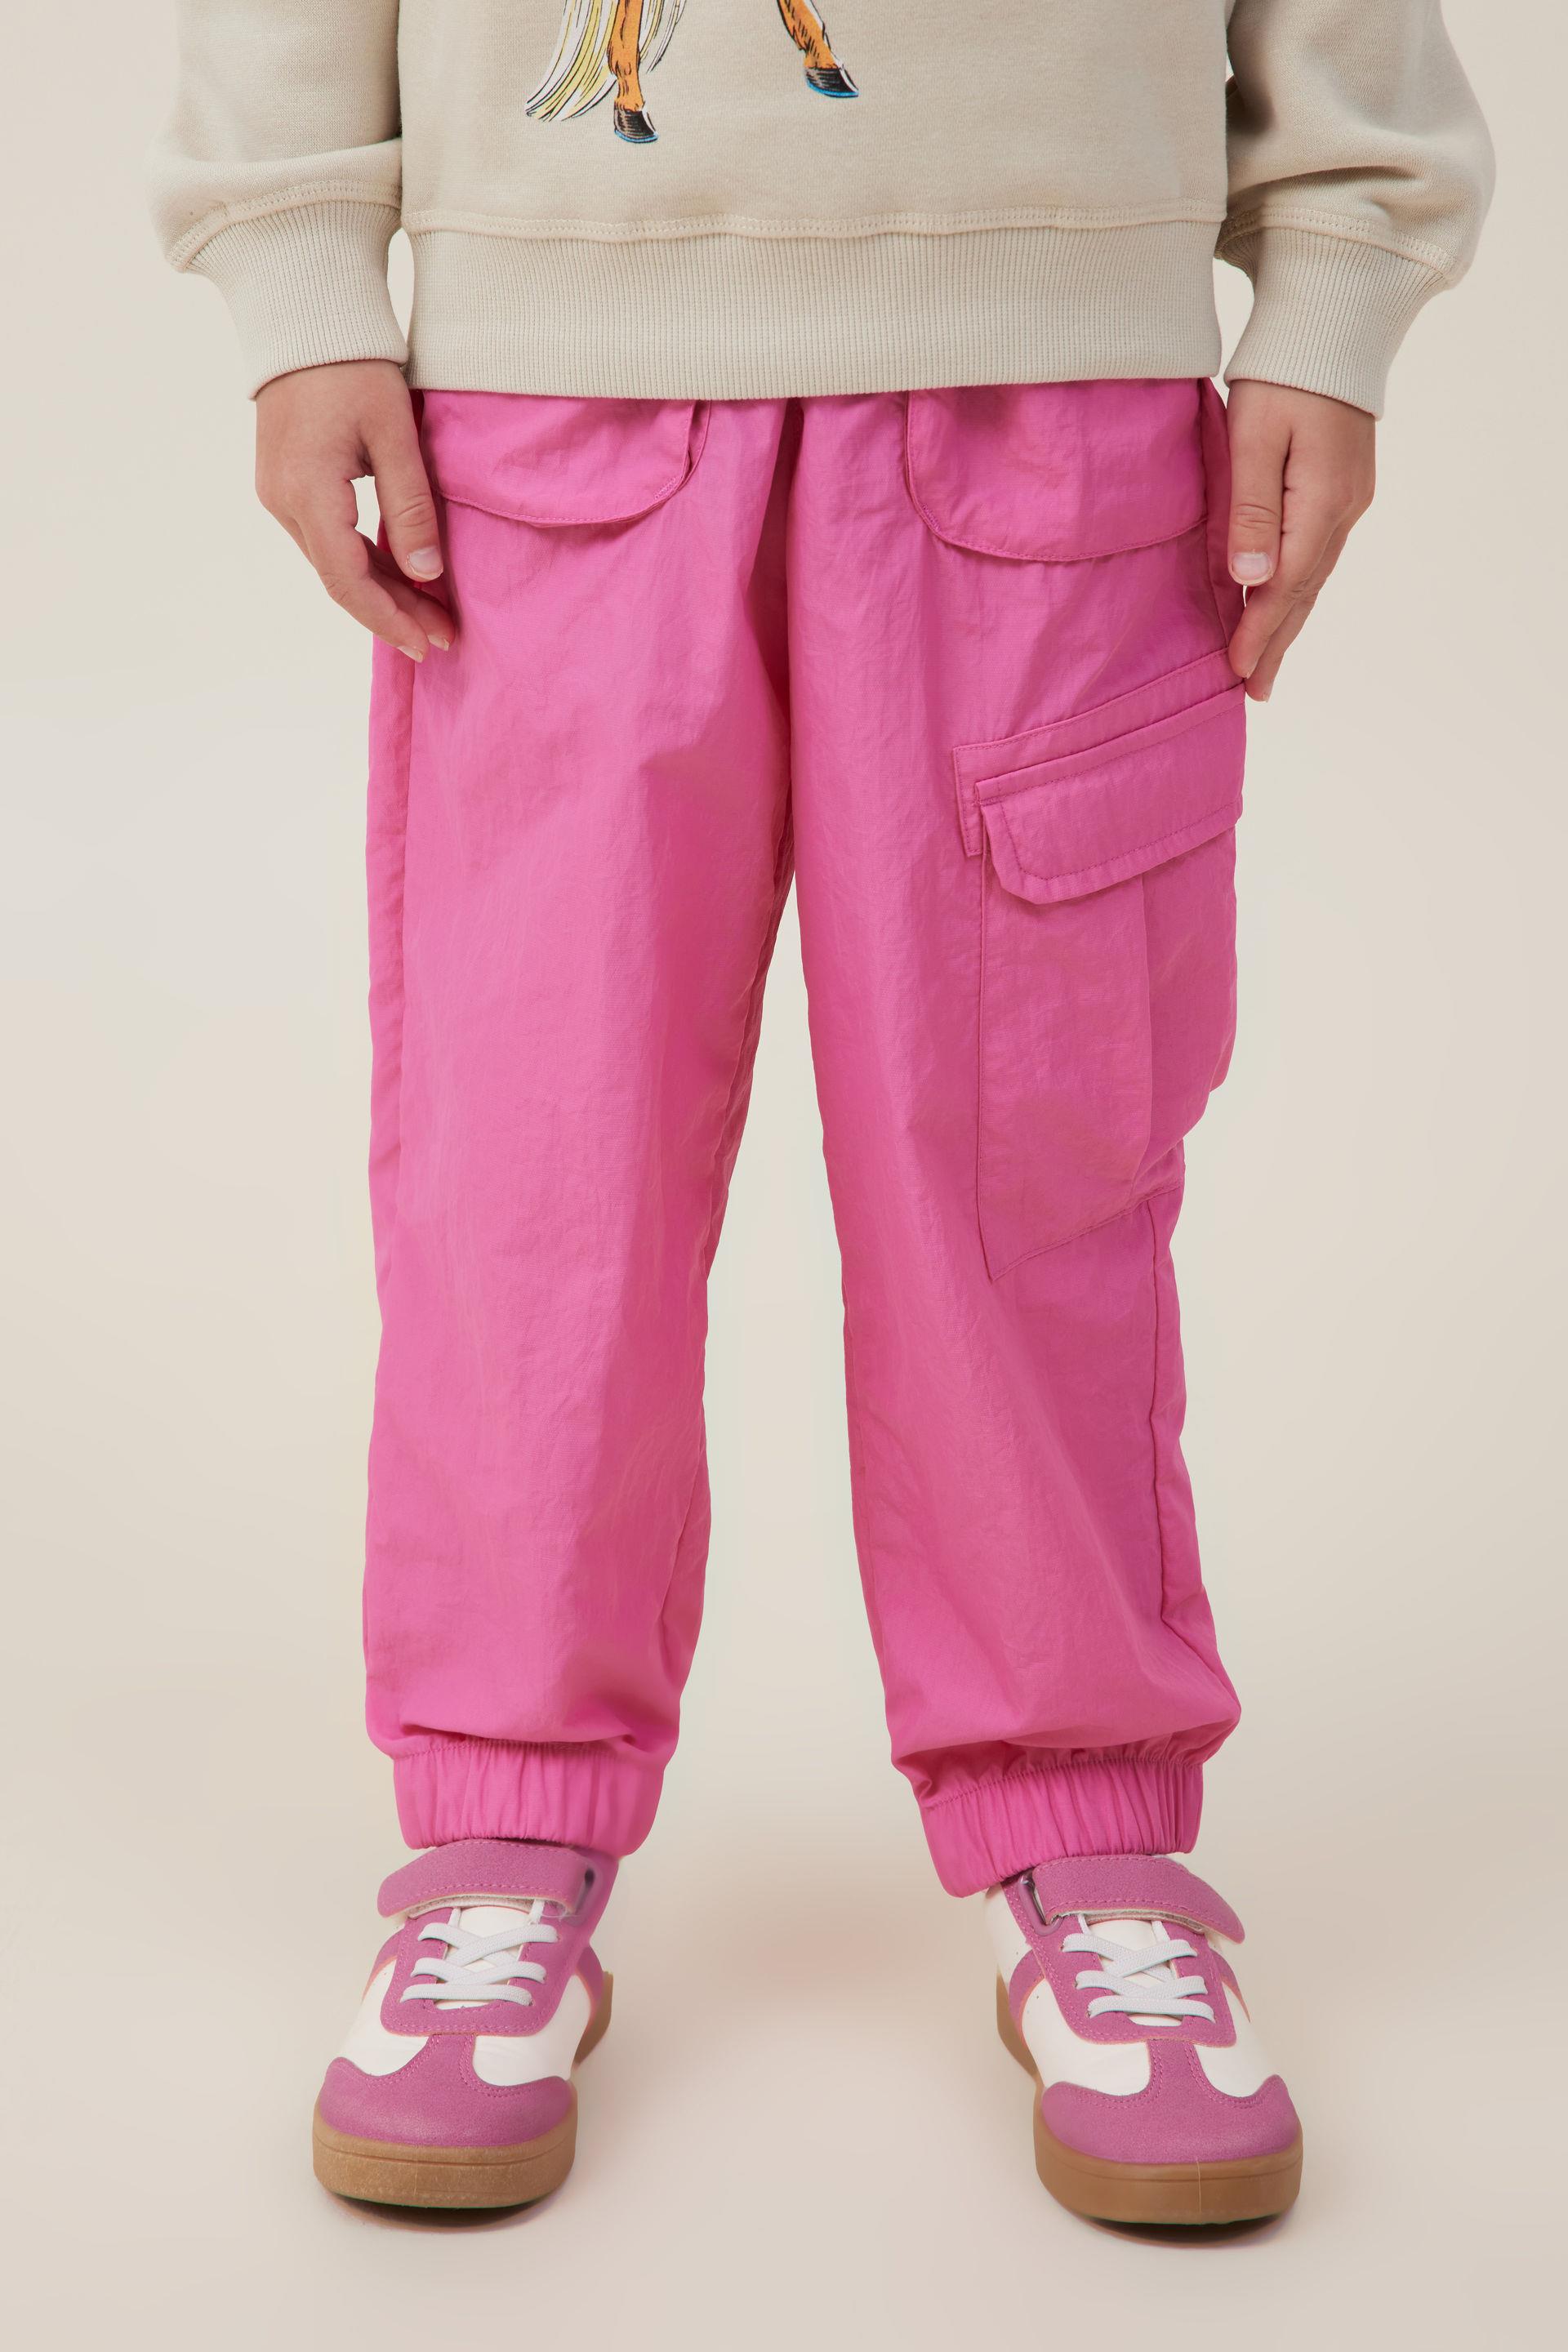 Cotton On Kids - Peta Parachute Pant - Raspberry pink